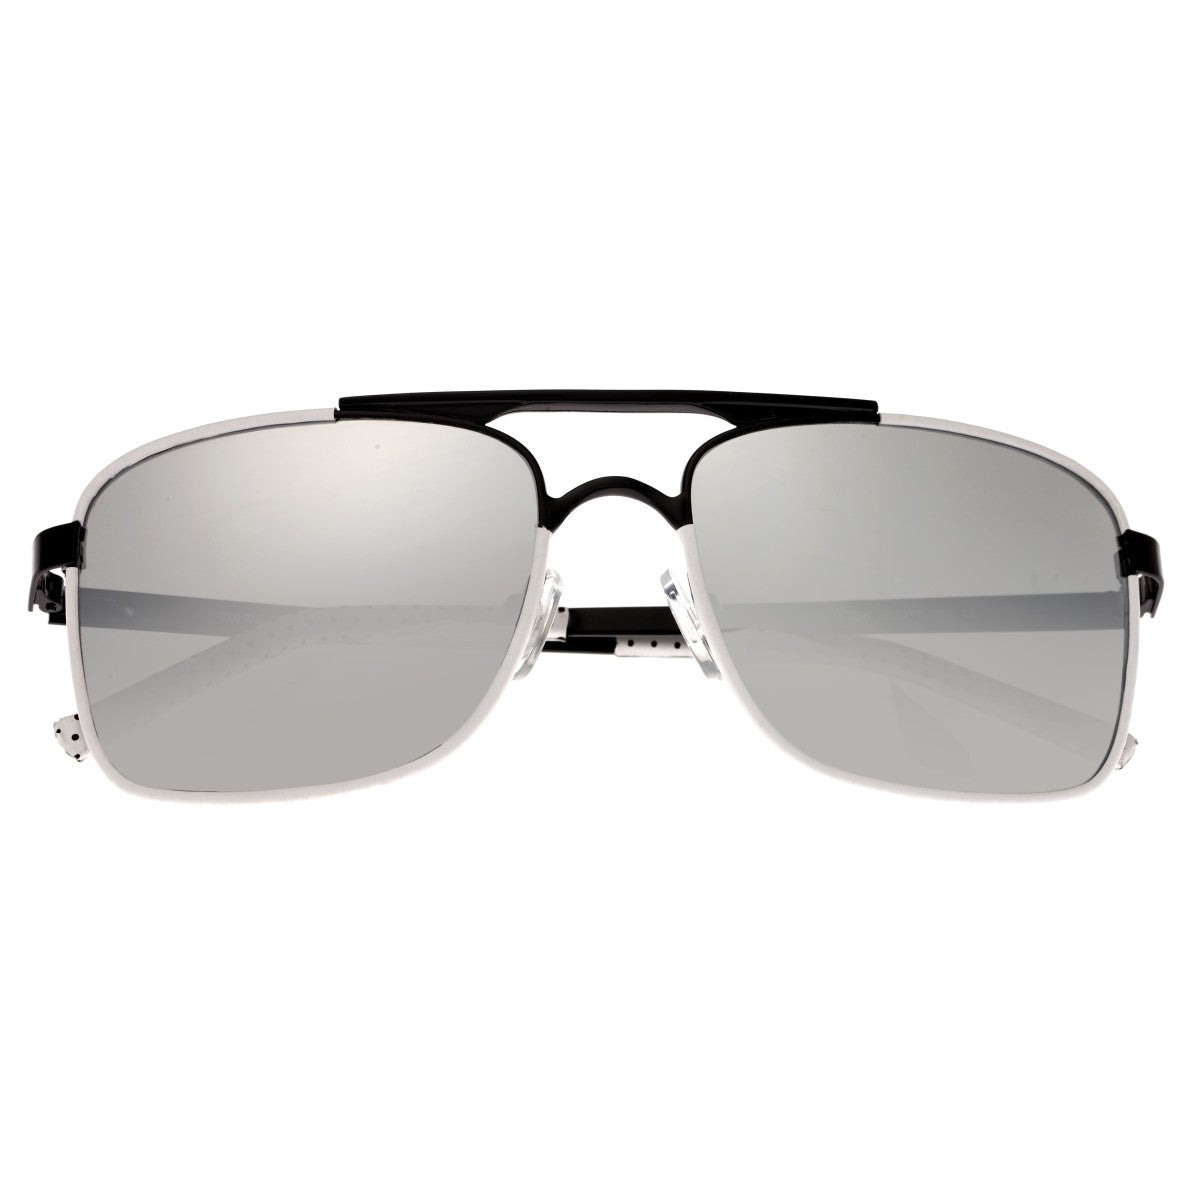 Breed Draco Polarized Sunglasses - Black/Silver - BSG047BK